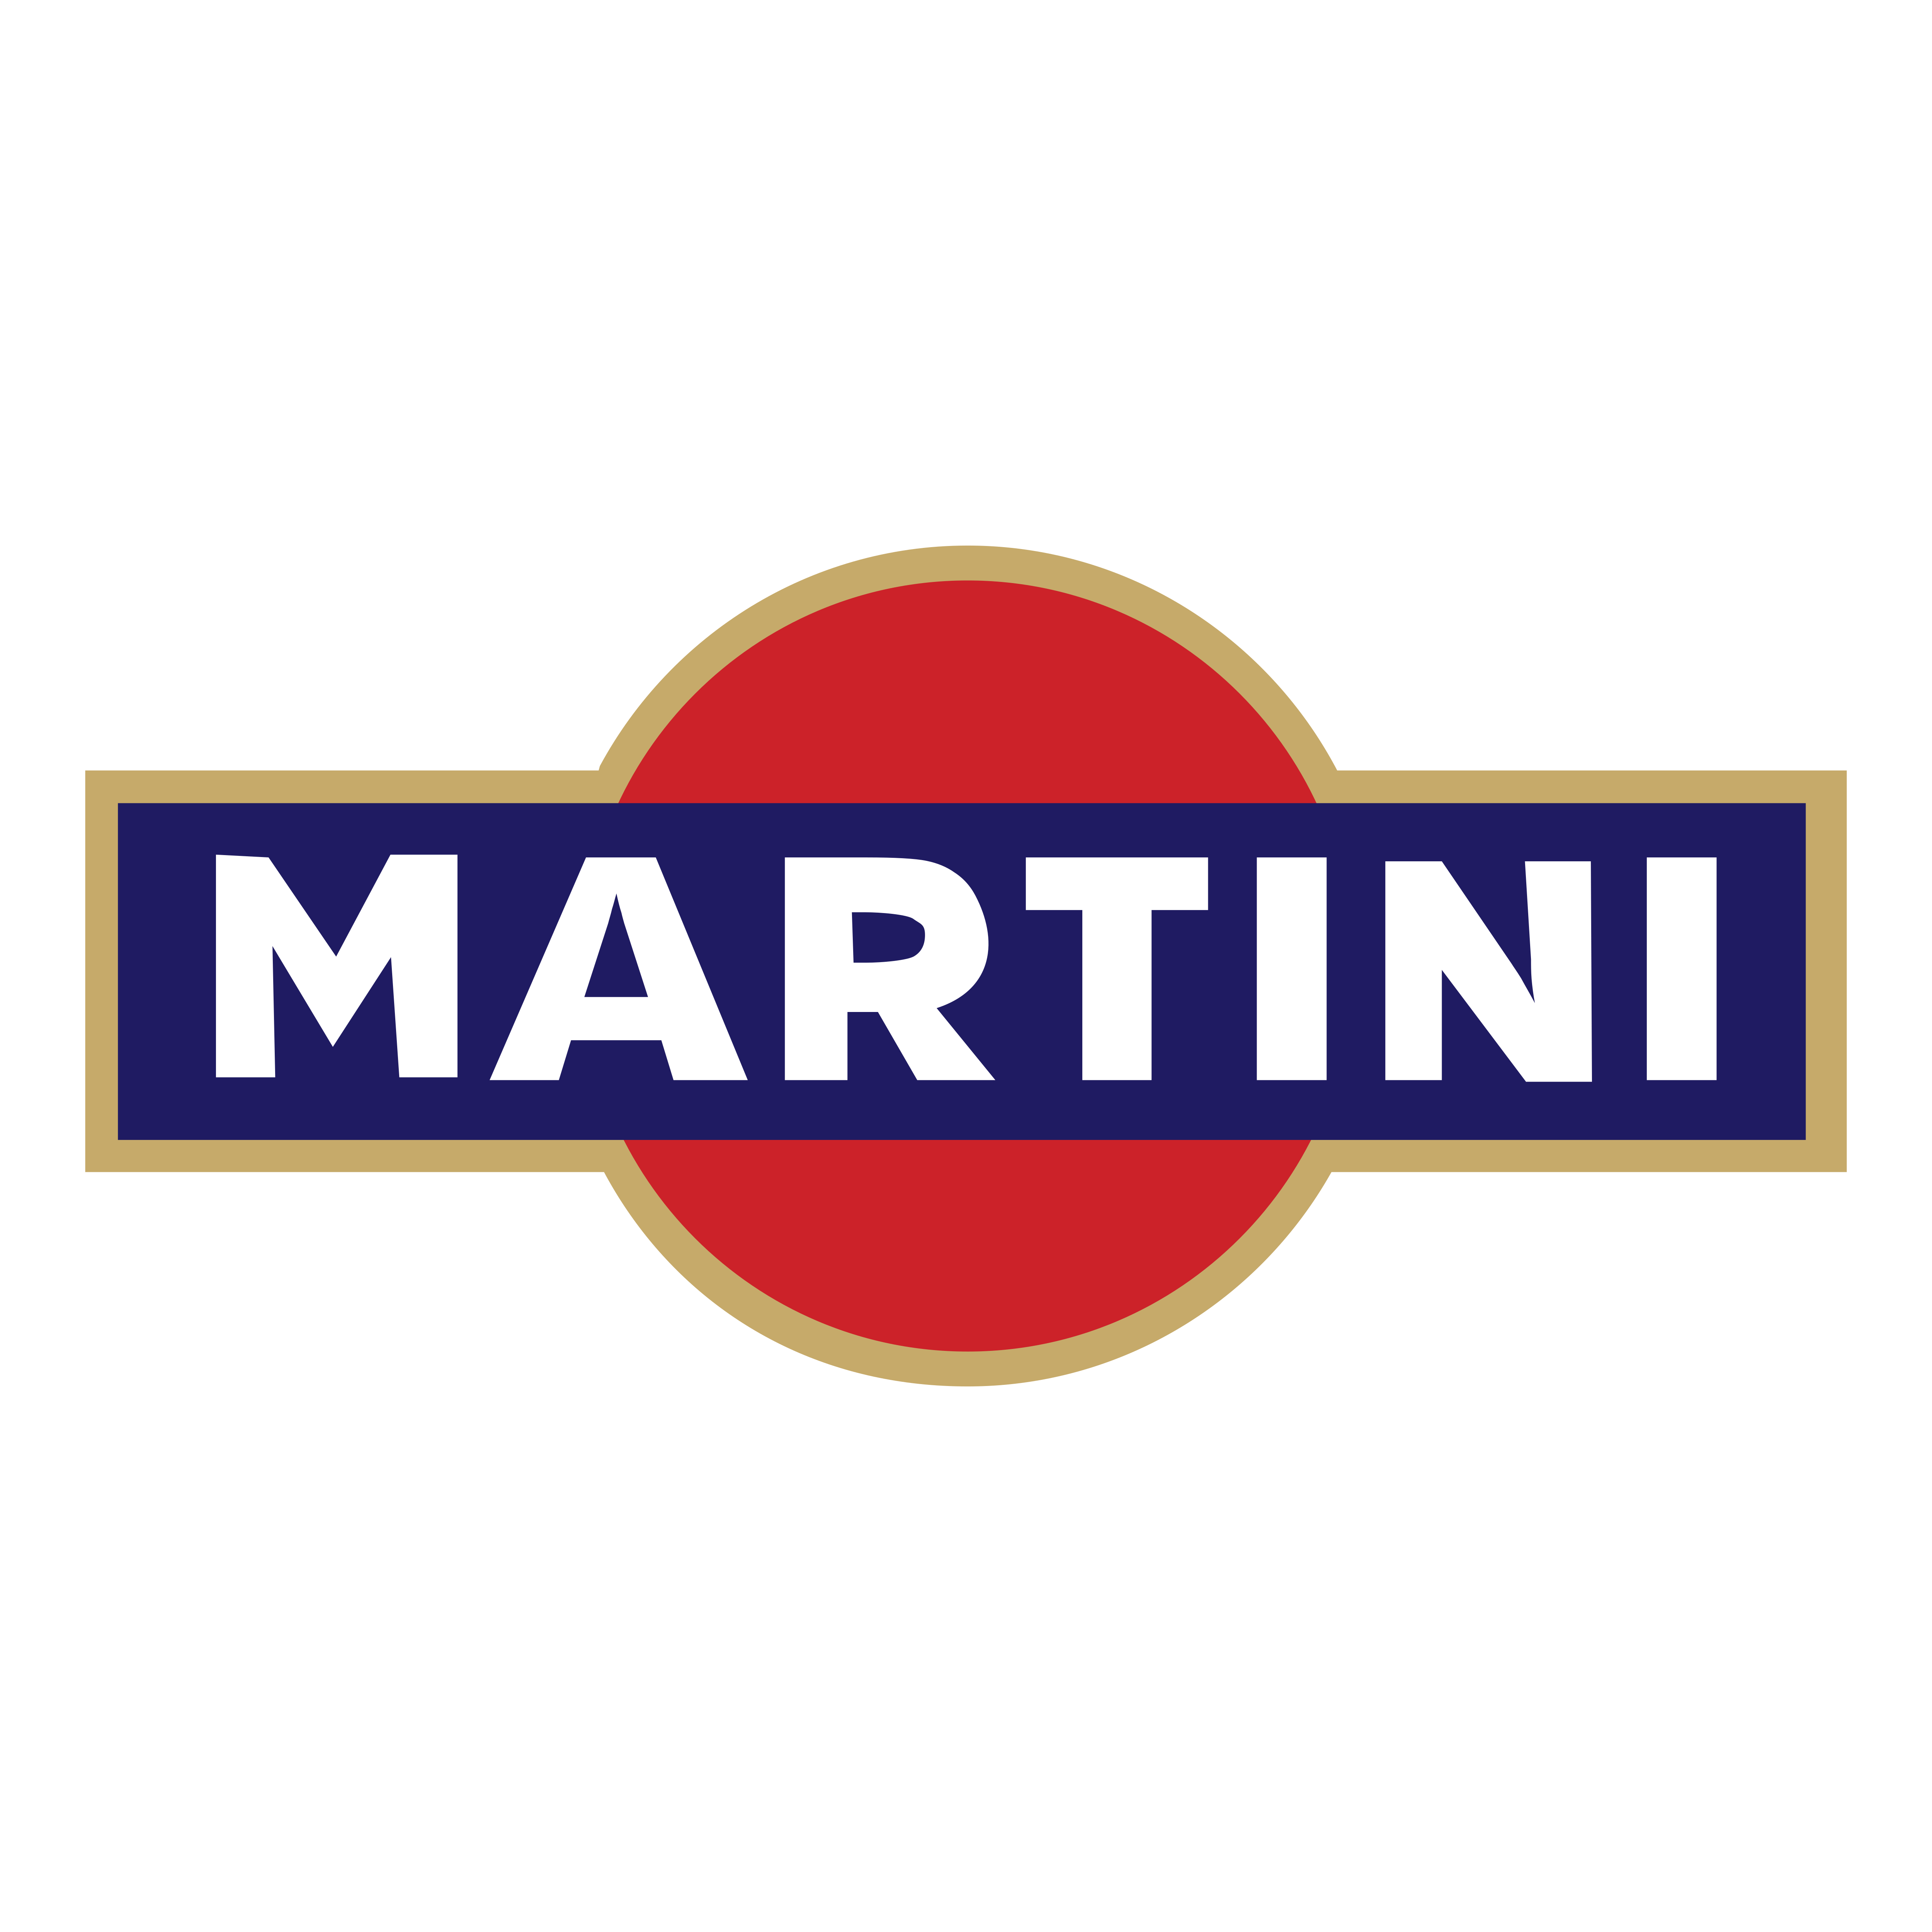 Martini Logo - Martini – Logos Download